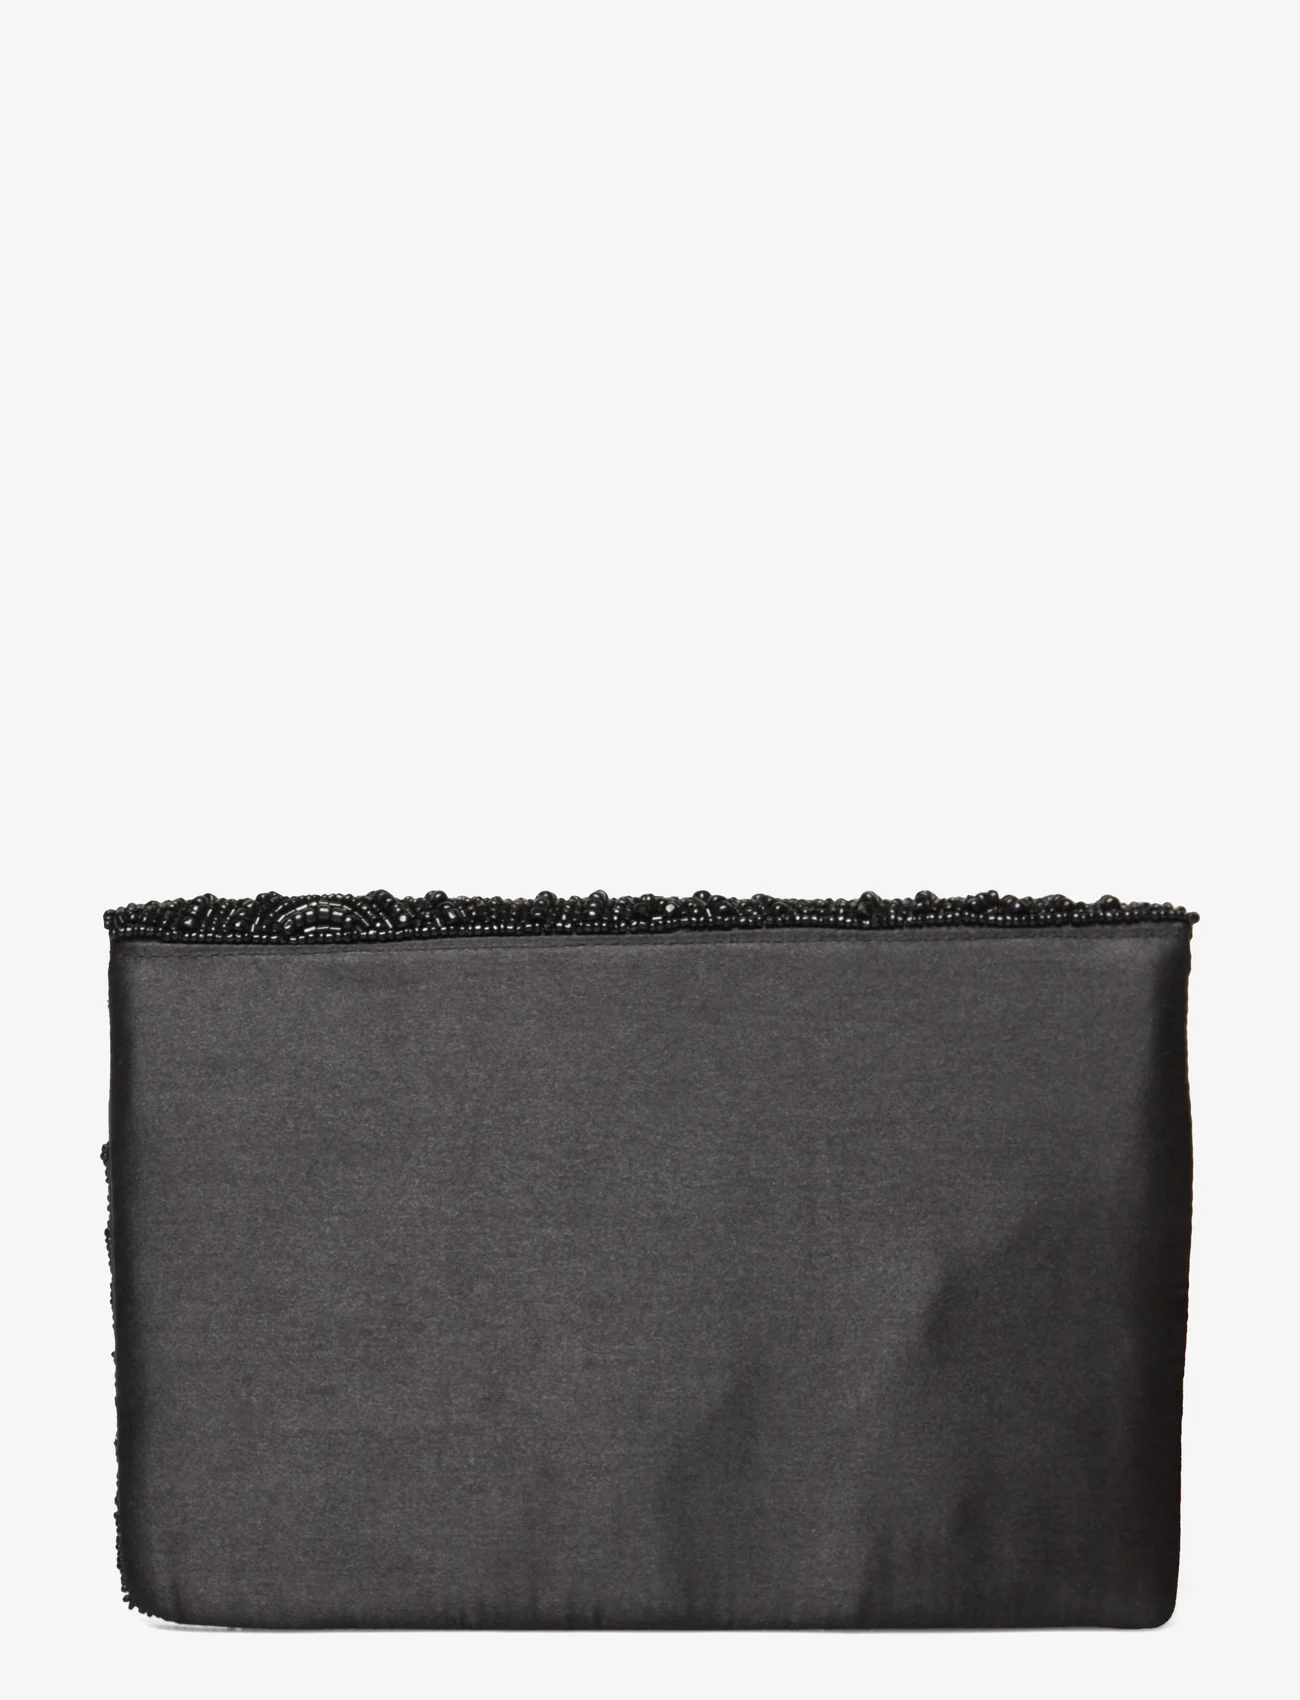 Pipol's Bazaar - Casablanca Black Clutch Bag - ballīšu apģērbs par outlet cenām - multi - 1